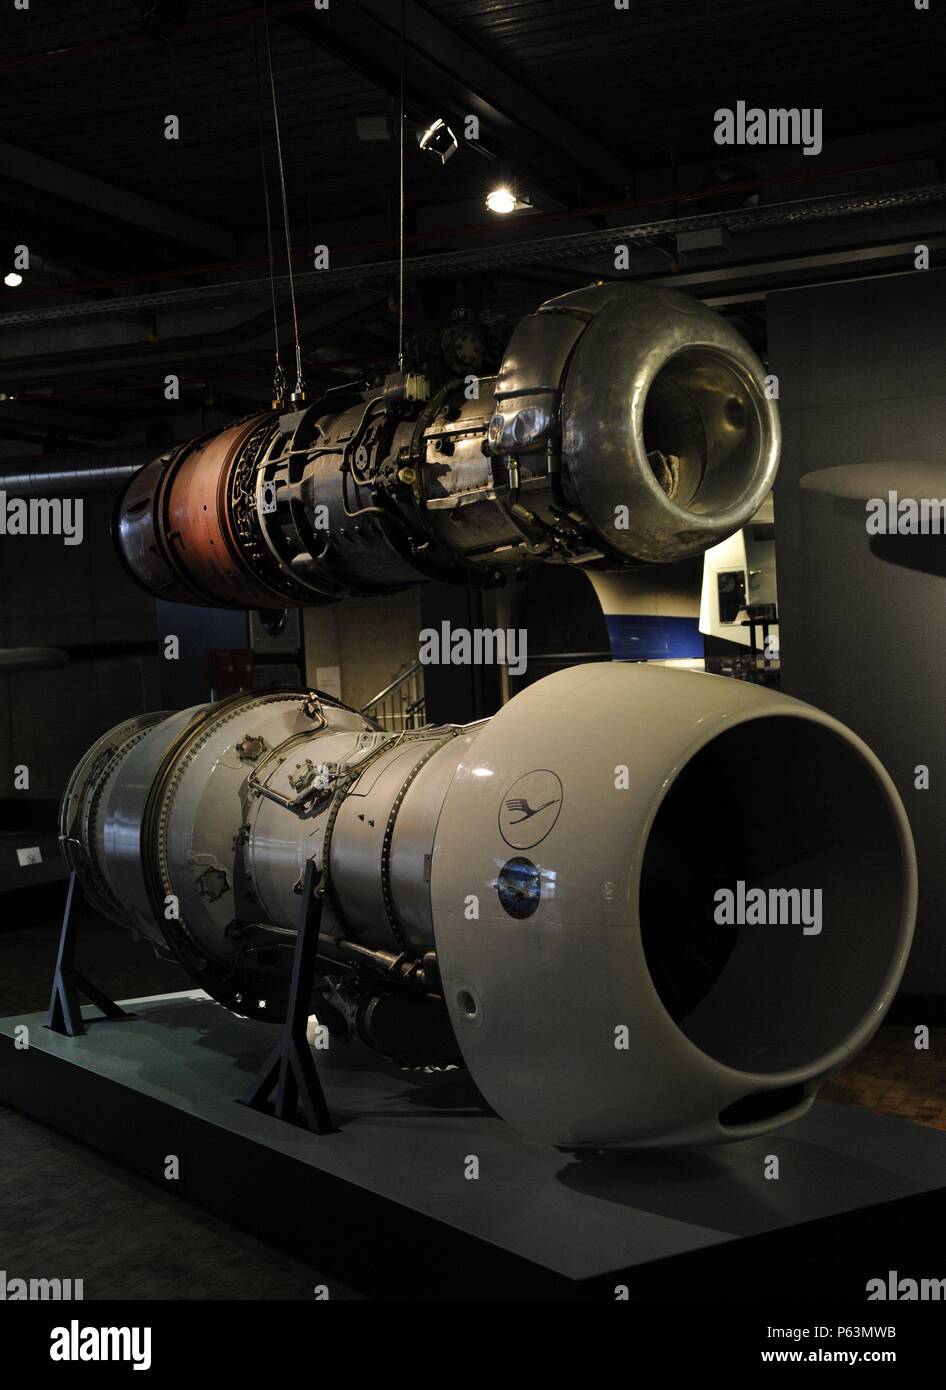 HISTORIA AVIACION. Motore norteamericano turborreactor Pratt & Whitney JT 3 (Década años 50's). Motore turborreactor alemán BMW003 (Década años 40's). Deutsches Technikmuseum. Berlino. Alemania. Foto Stock